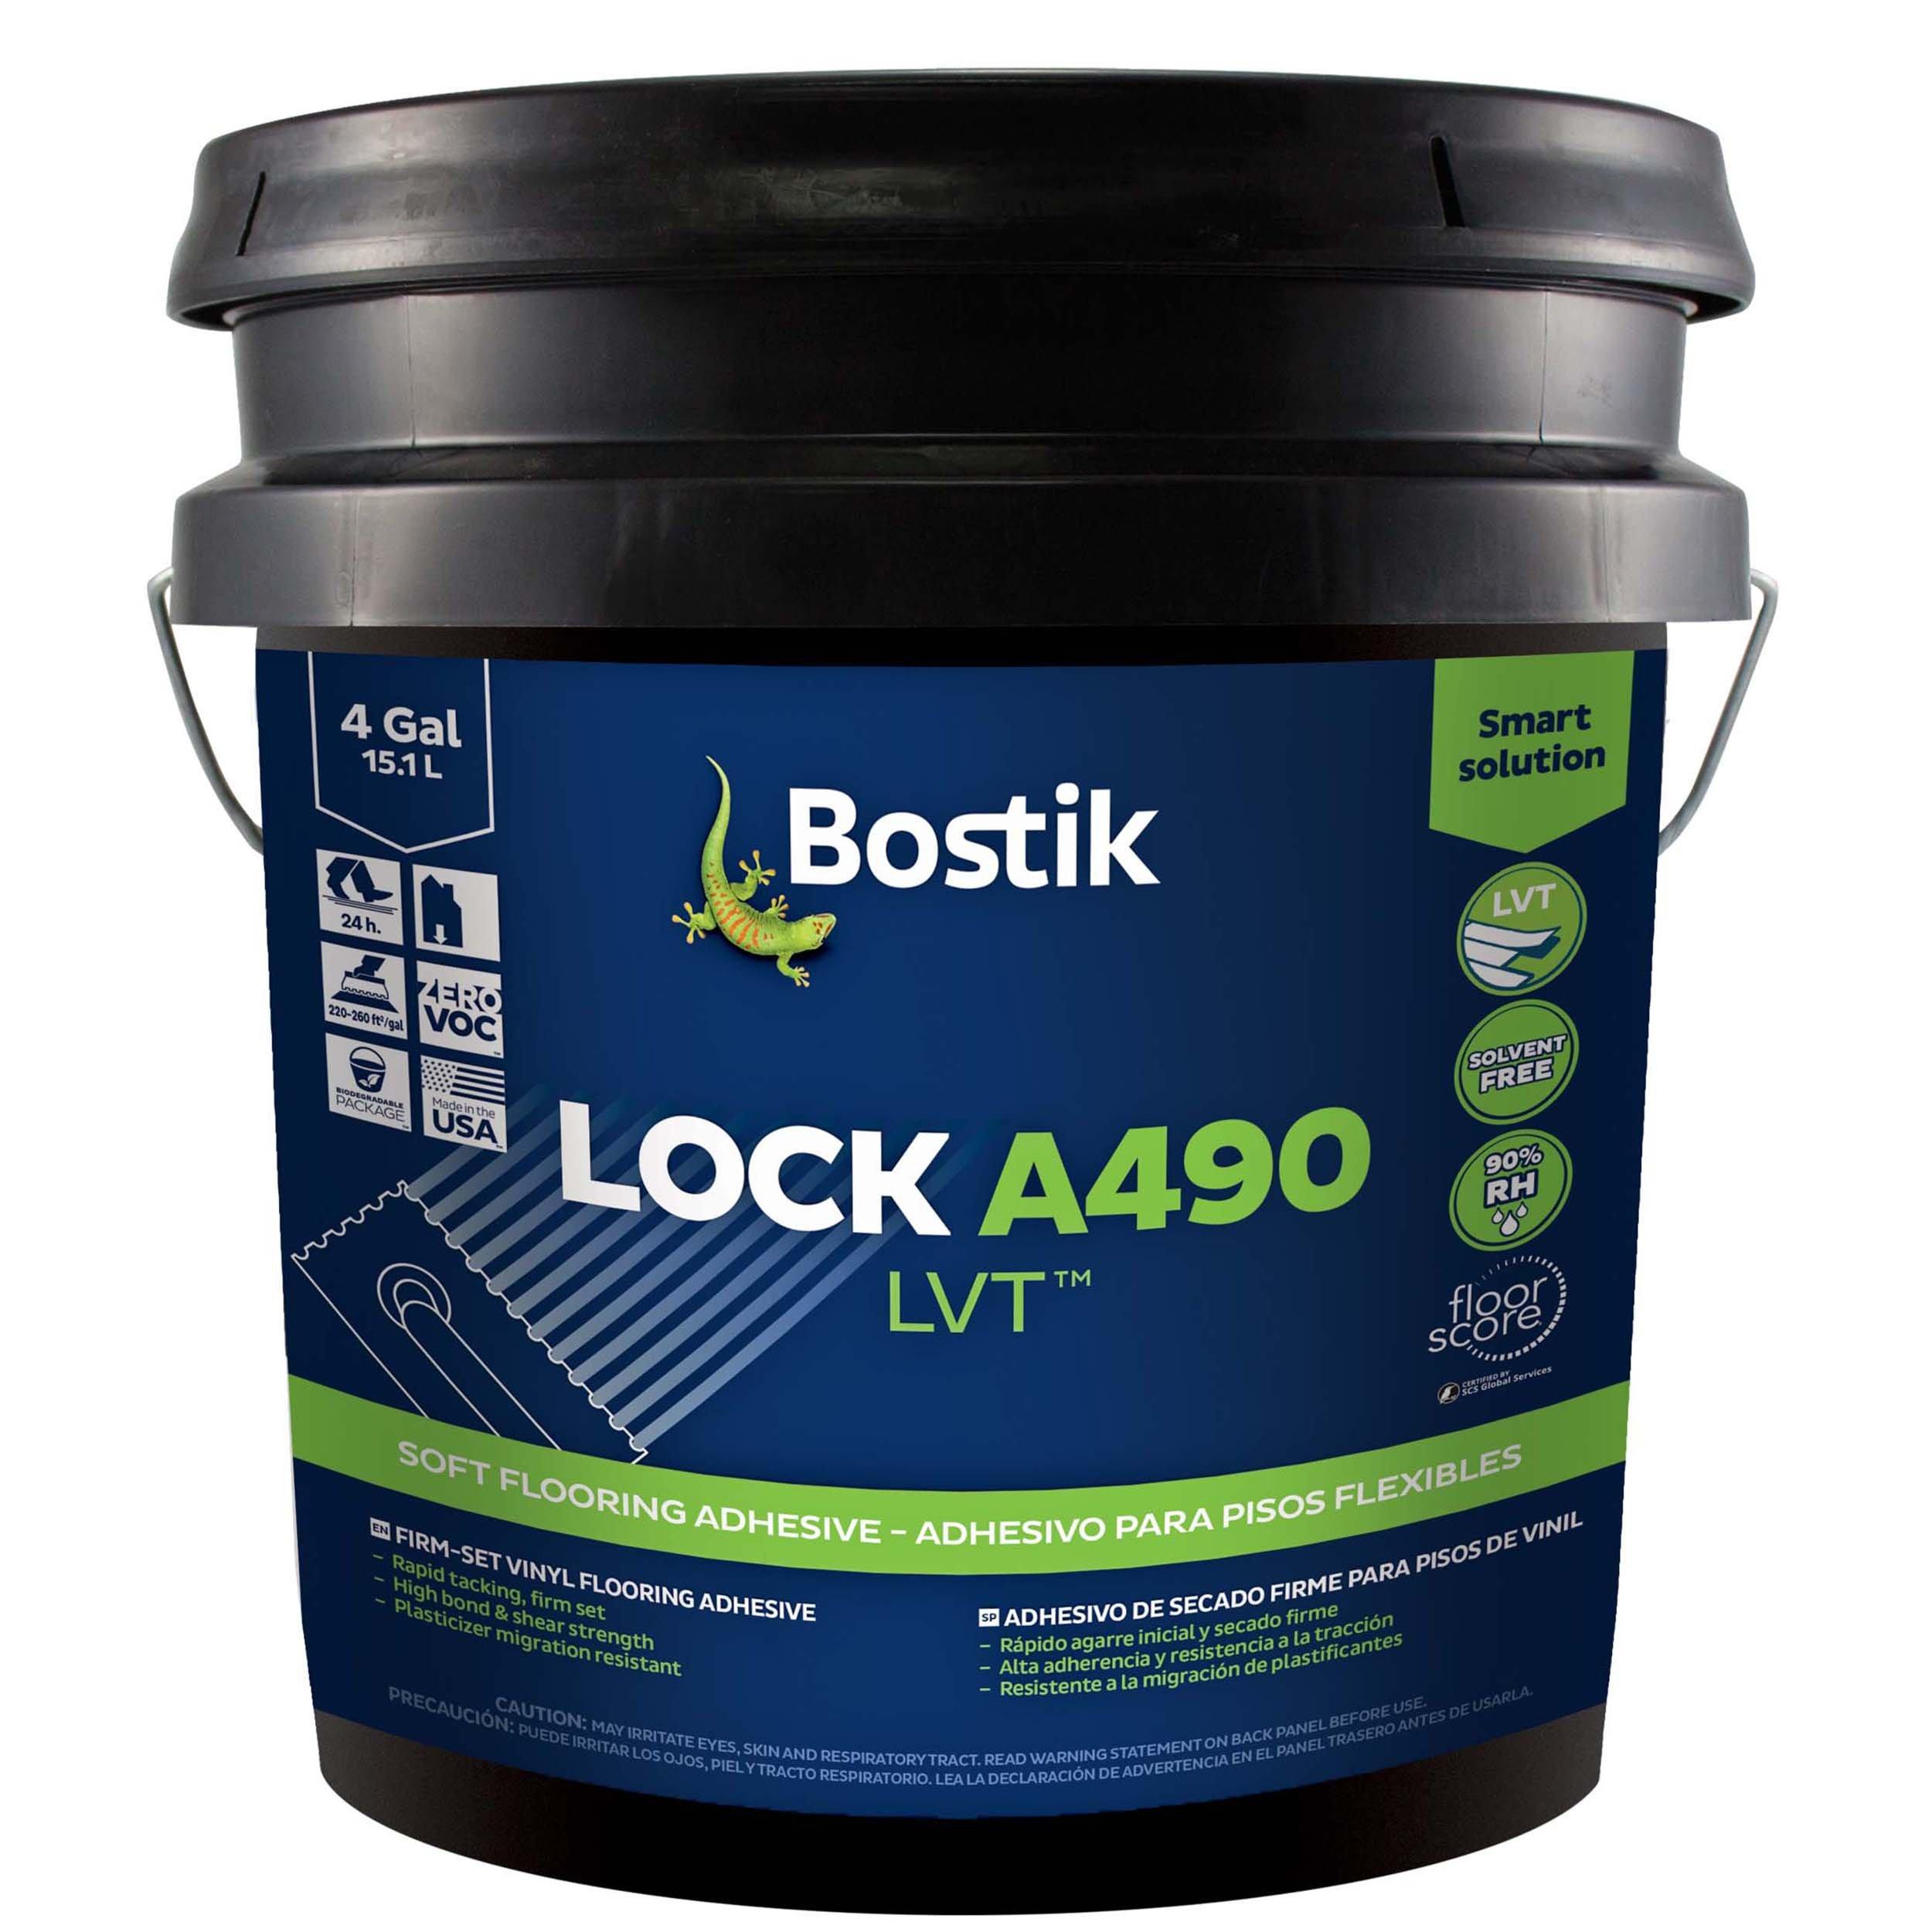 Bostik Lock A490 LVT Hardwood Flooring Adhesive